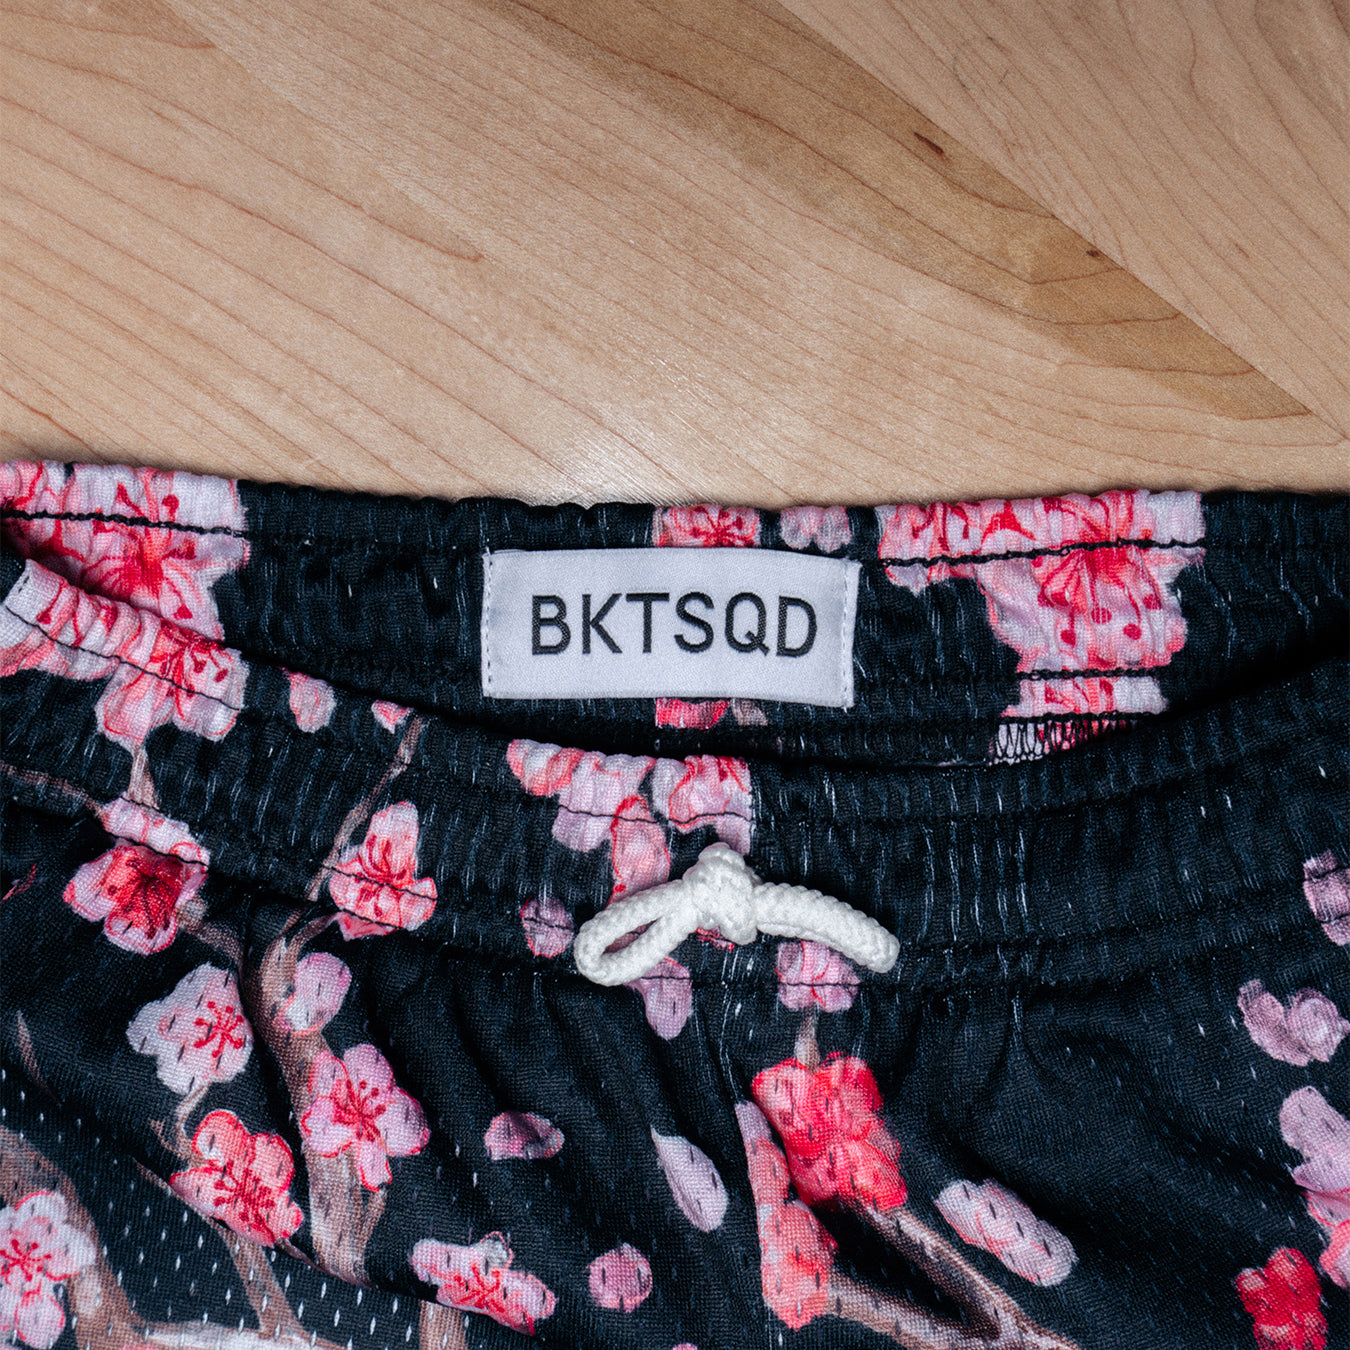 Cherry Blossom Shorts - YOUTH